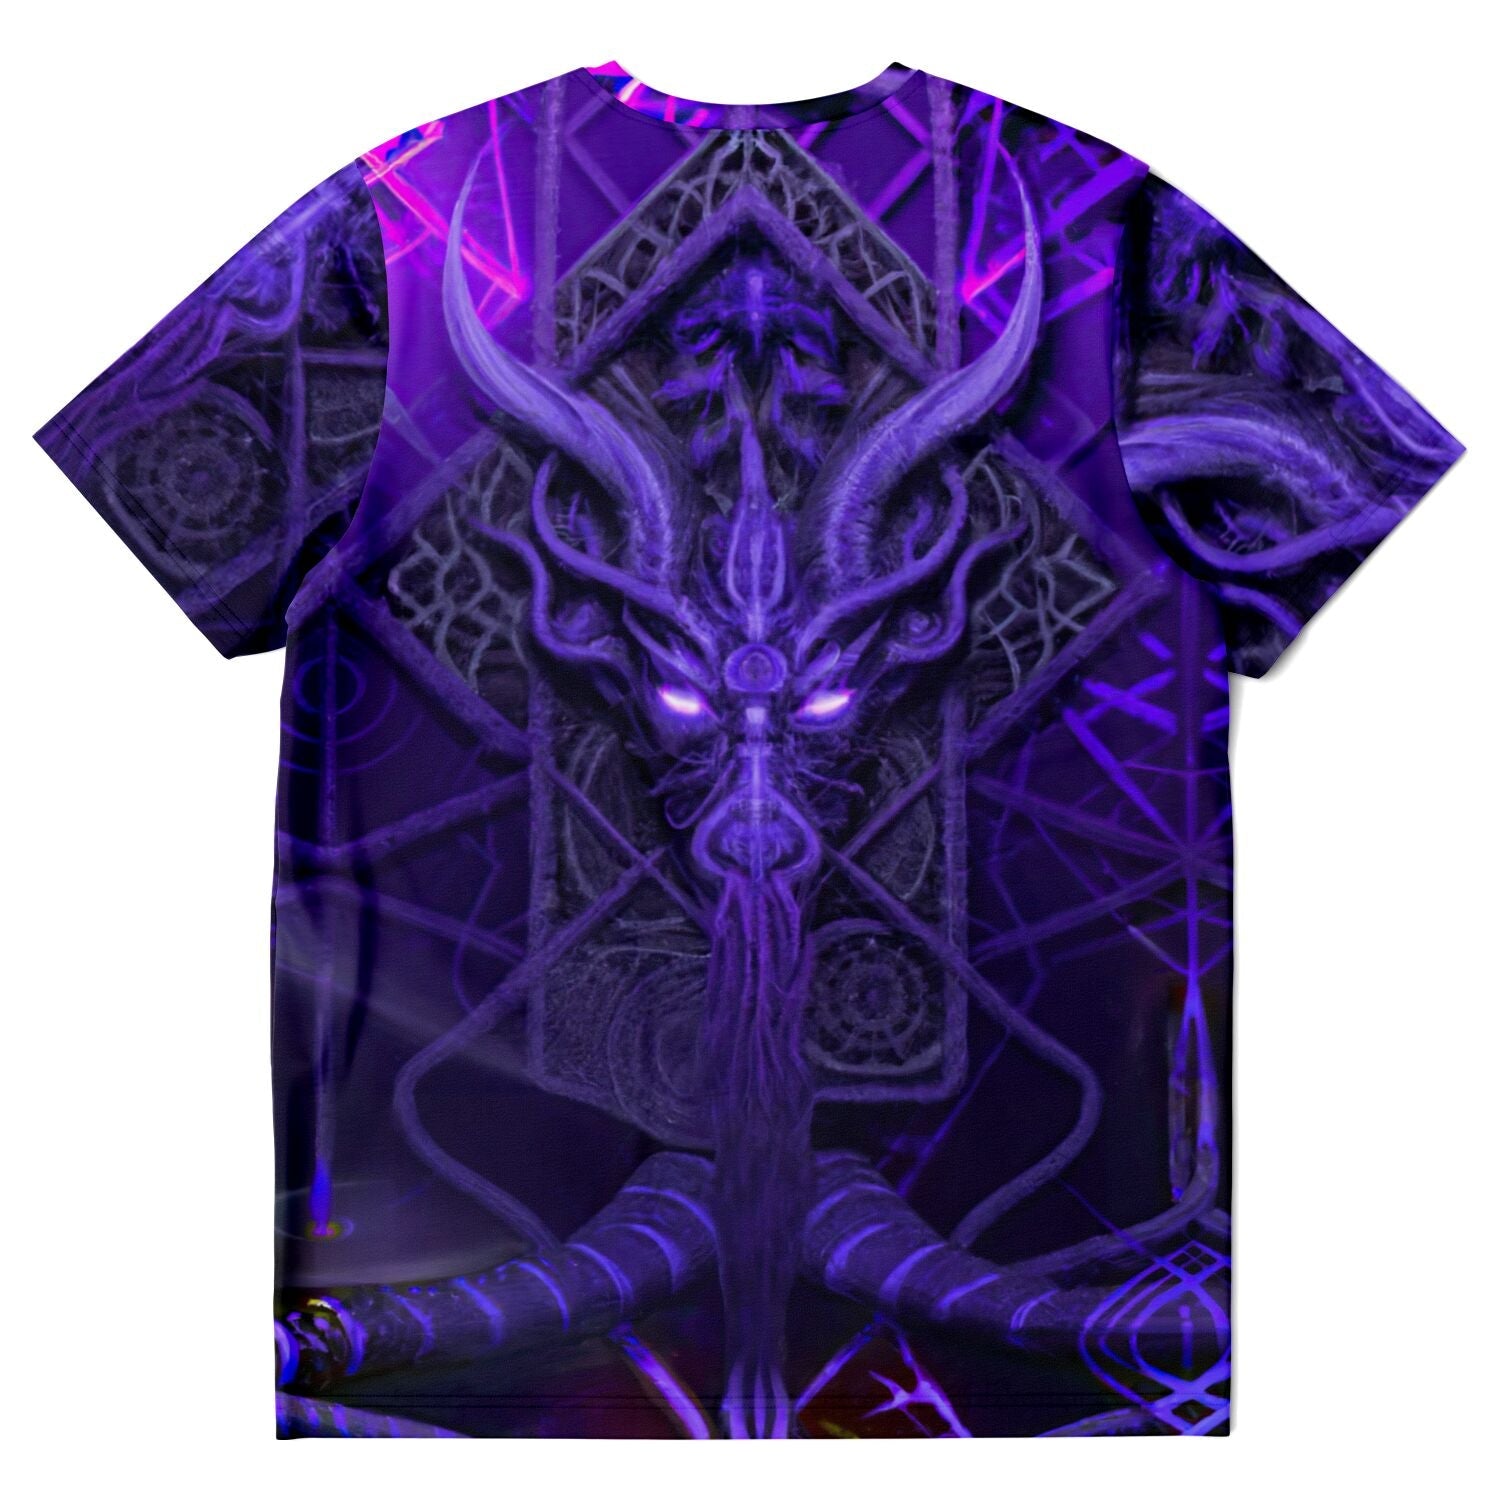 T-shirt Cyborg Baphomet | Digital Tentacle Rave | Trippy EDM Consciousness Graphic Art T-Shirt